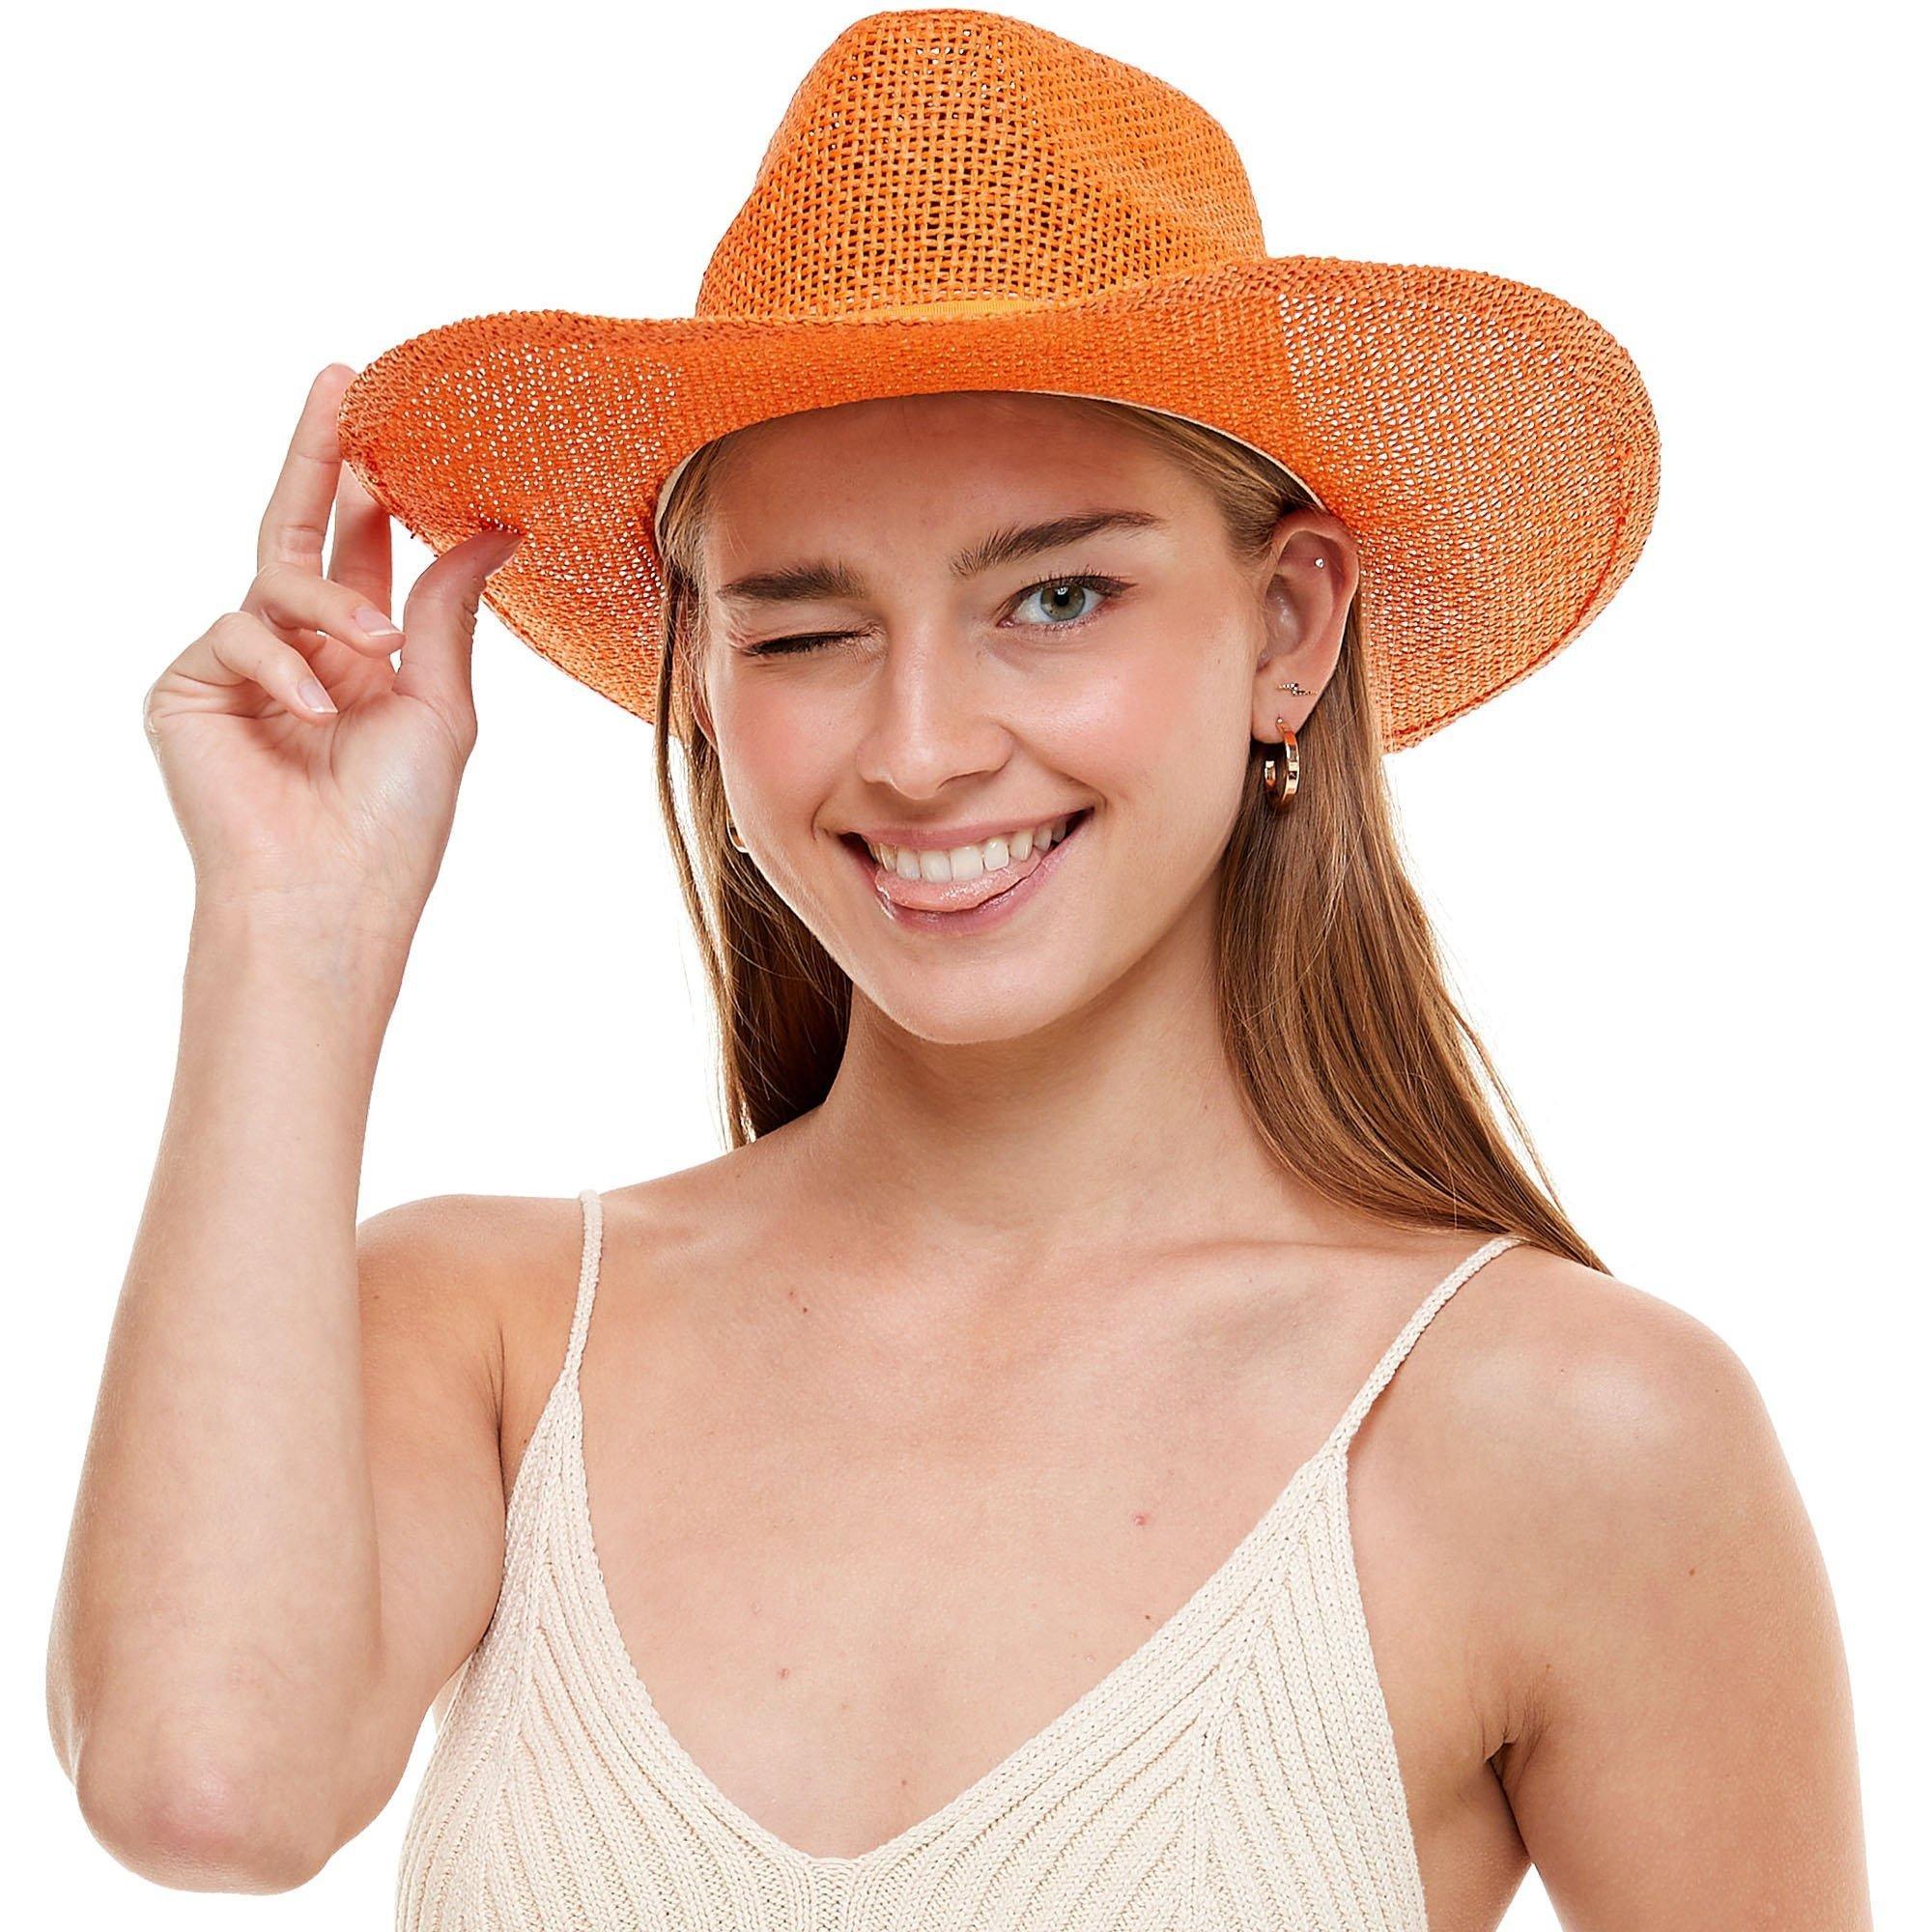 Orange Burlap Cowboy Hat